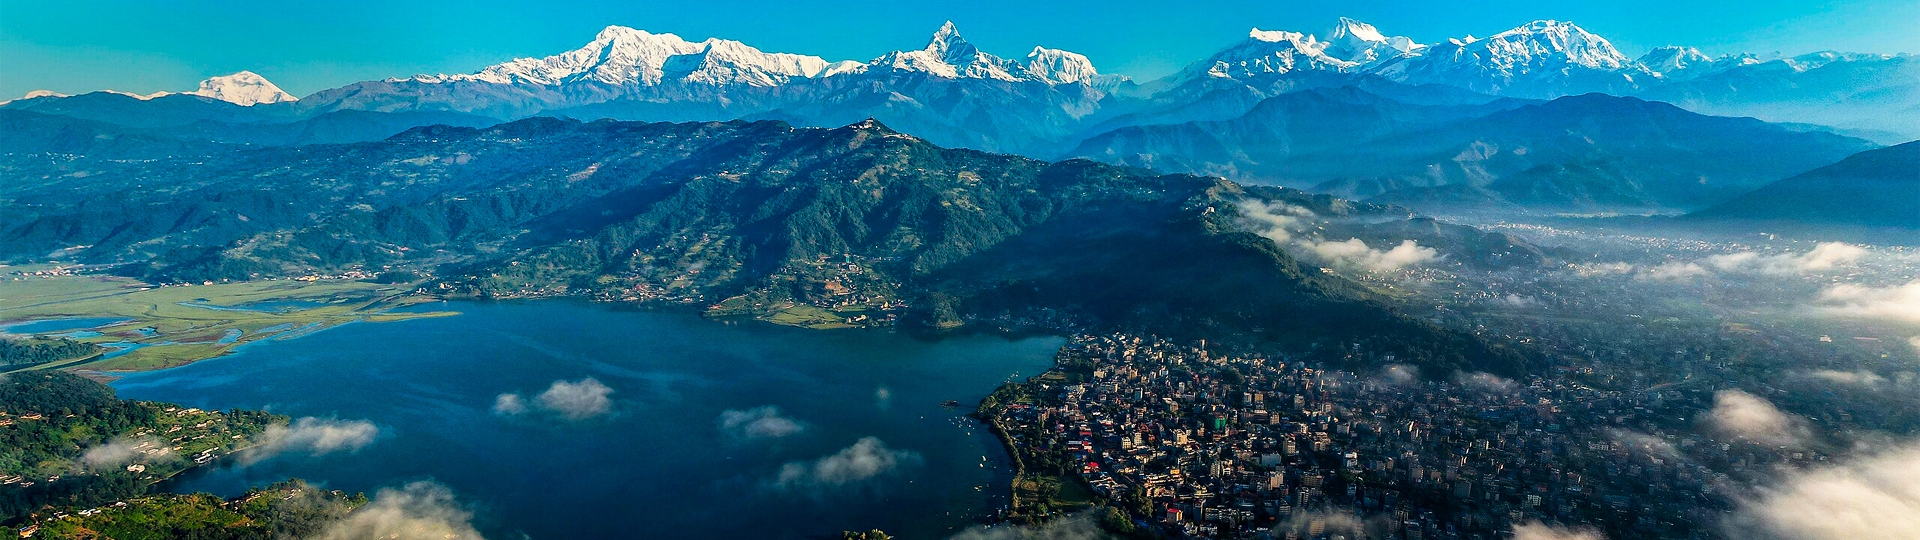 Pokhara: The Tourism Capital of Nepal